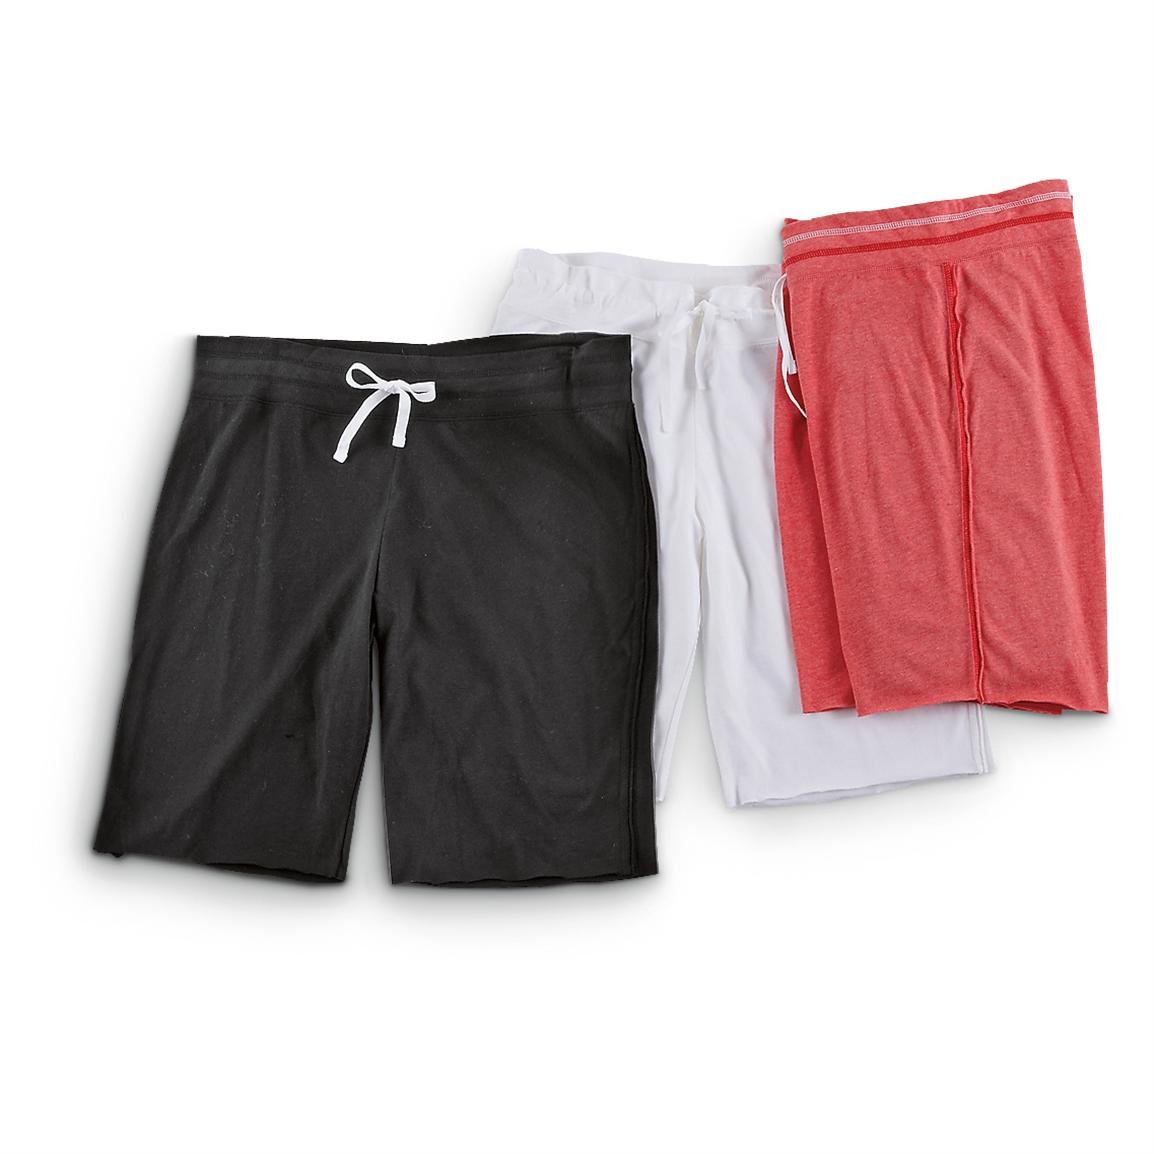 3-Pk. of Women's Reebok® Knit Shorts - 235732, at Sportsman's Guide